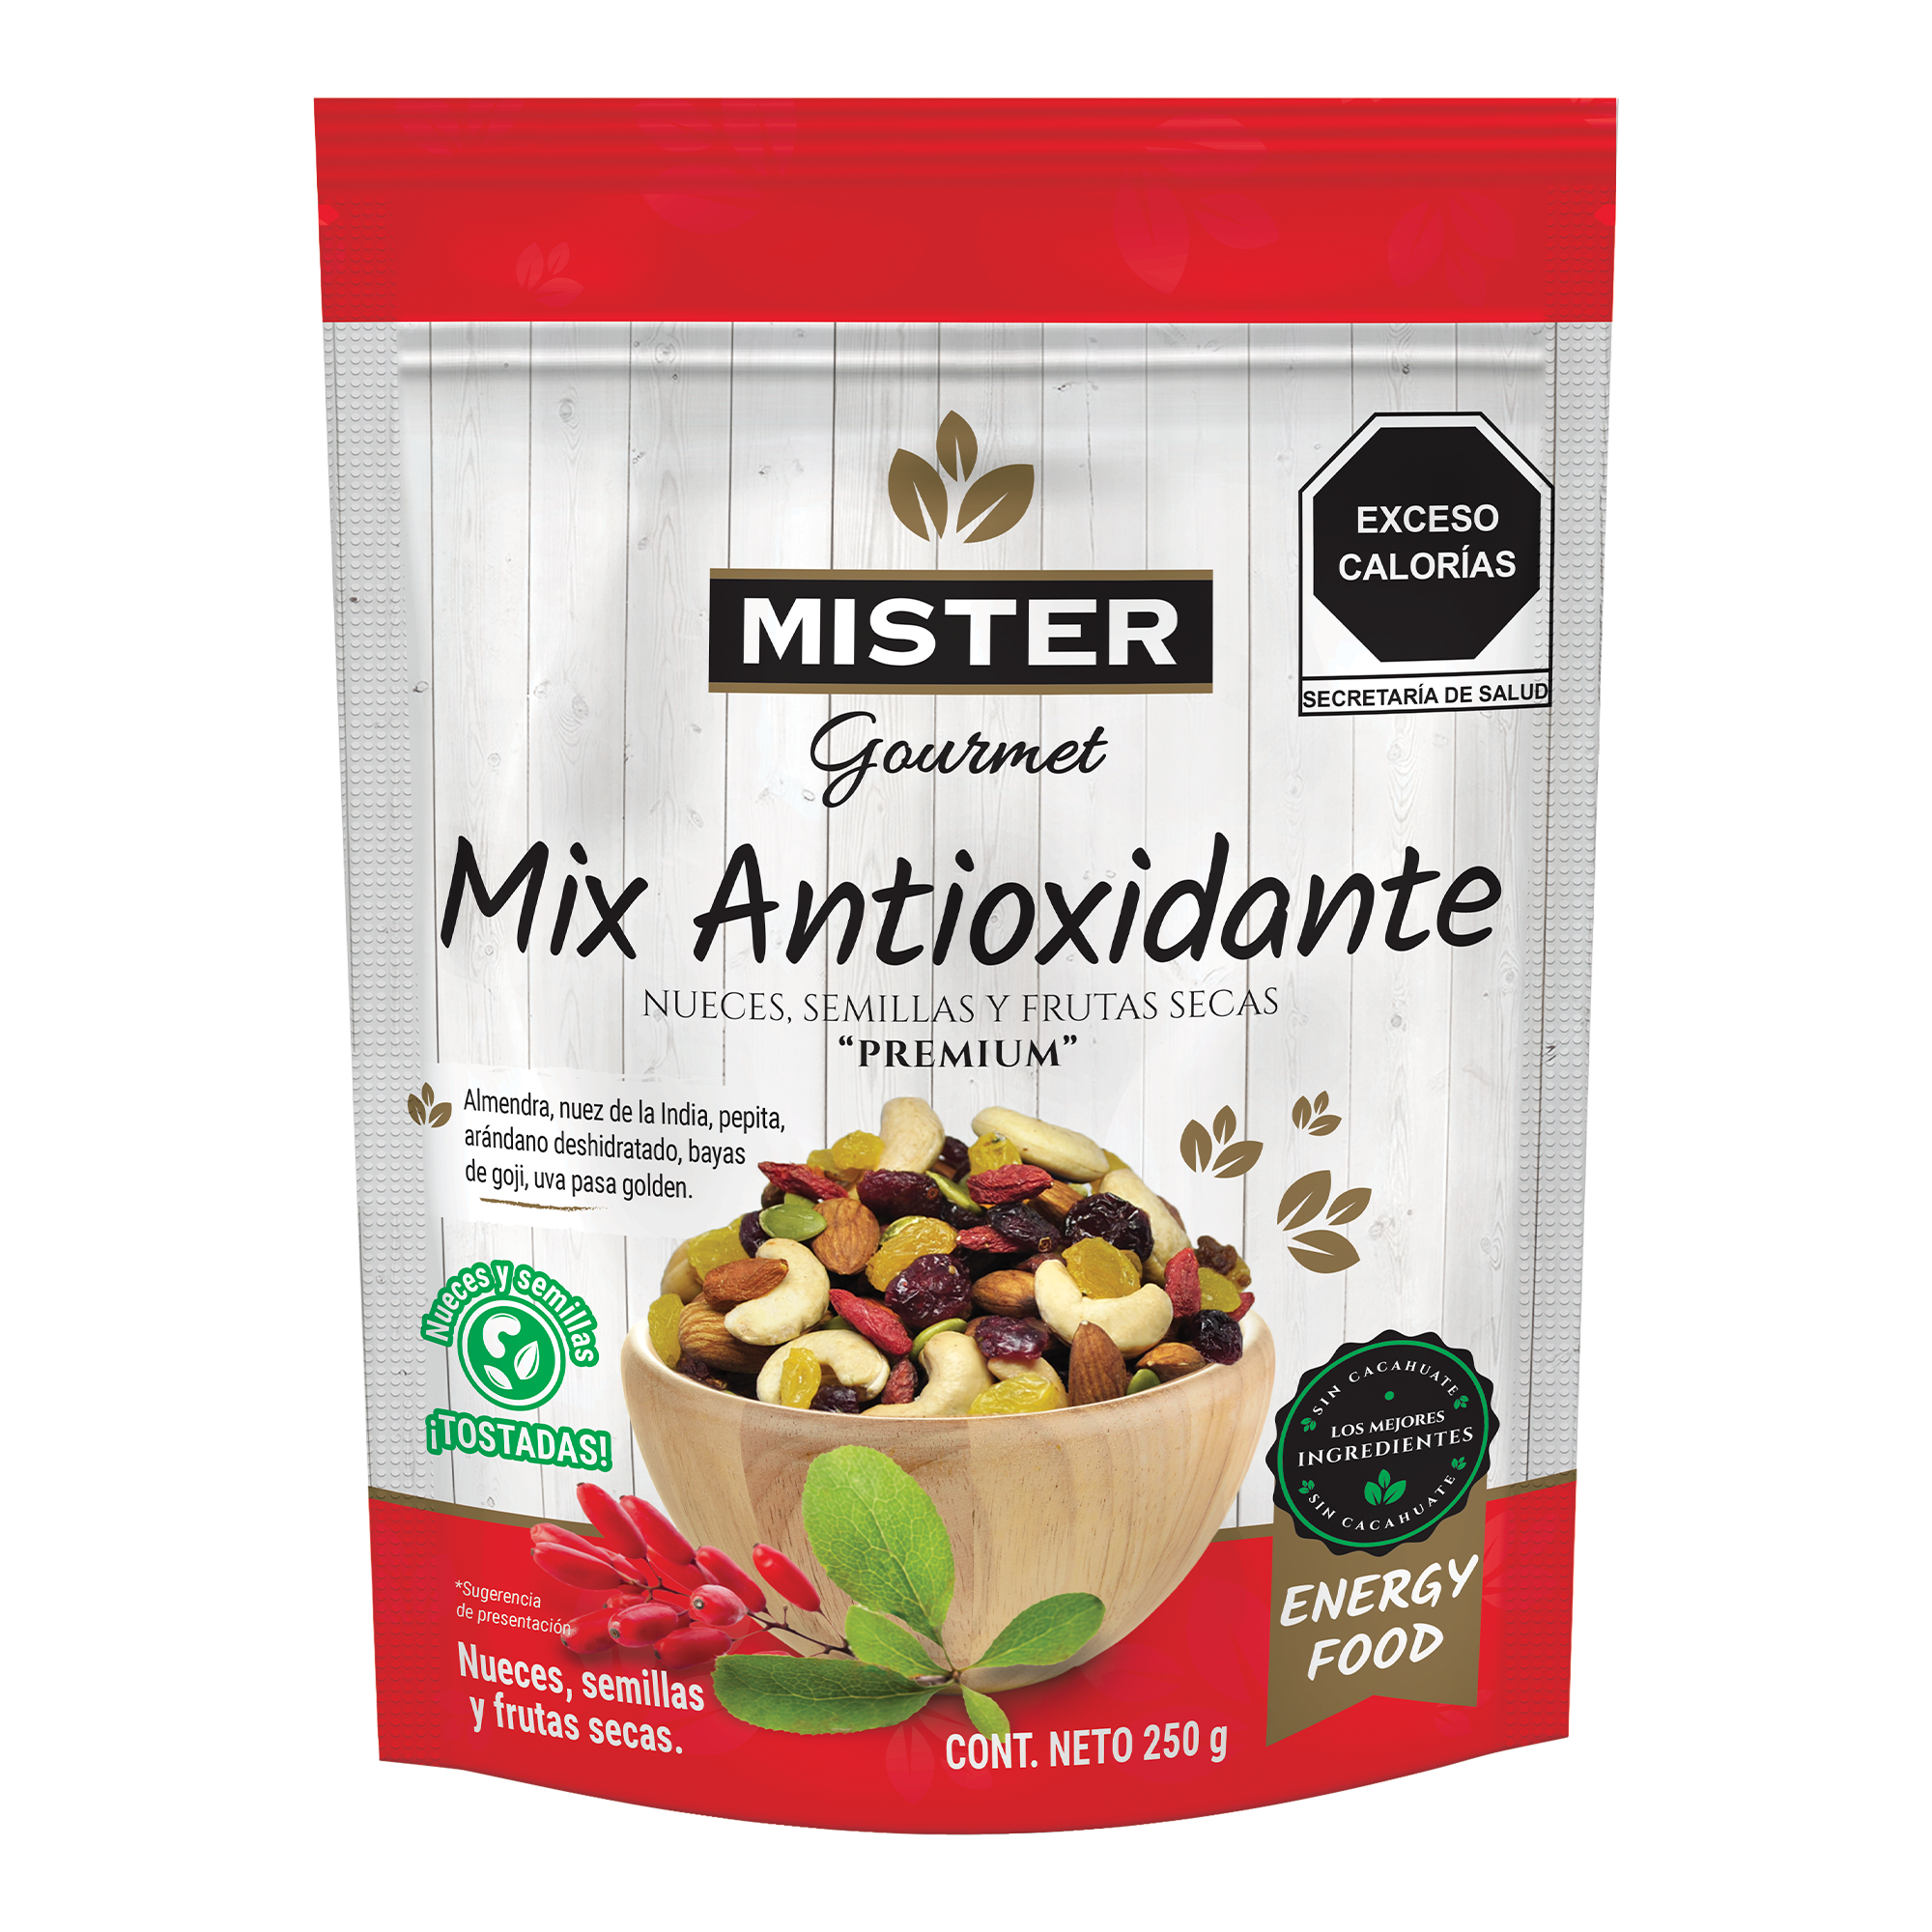 Mix atioxidante